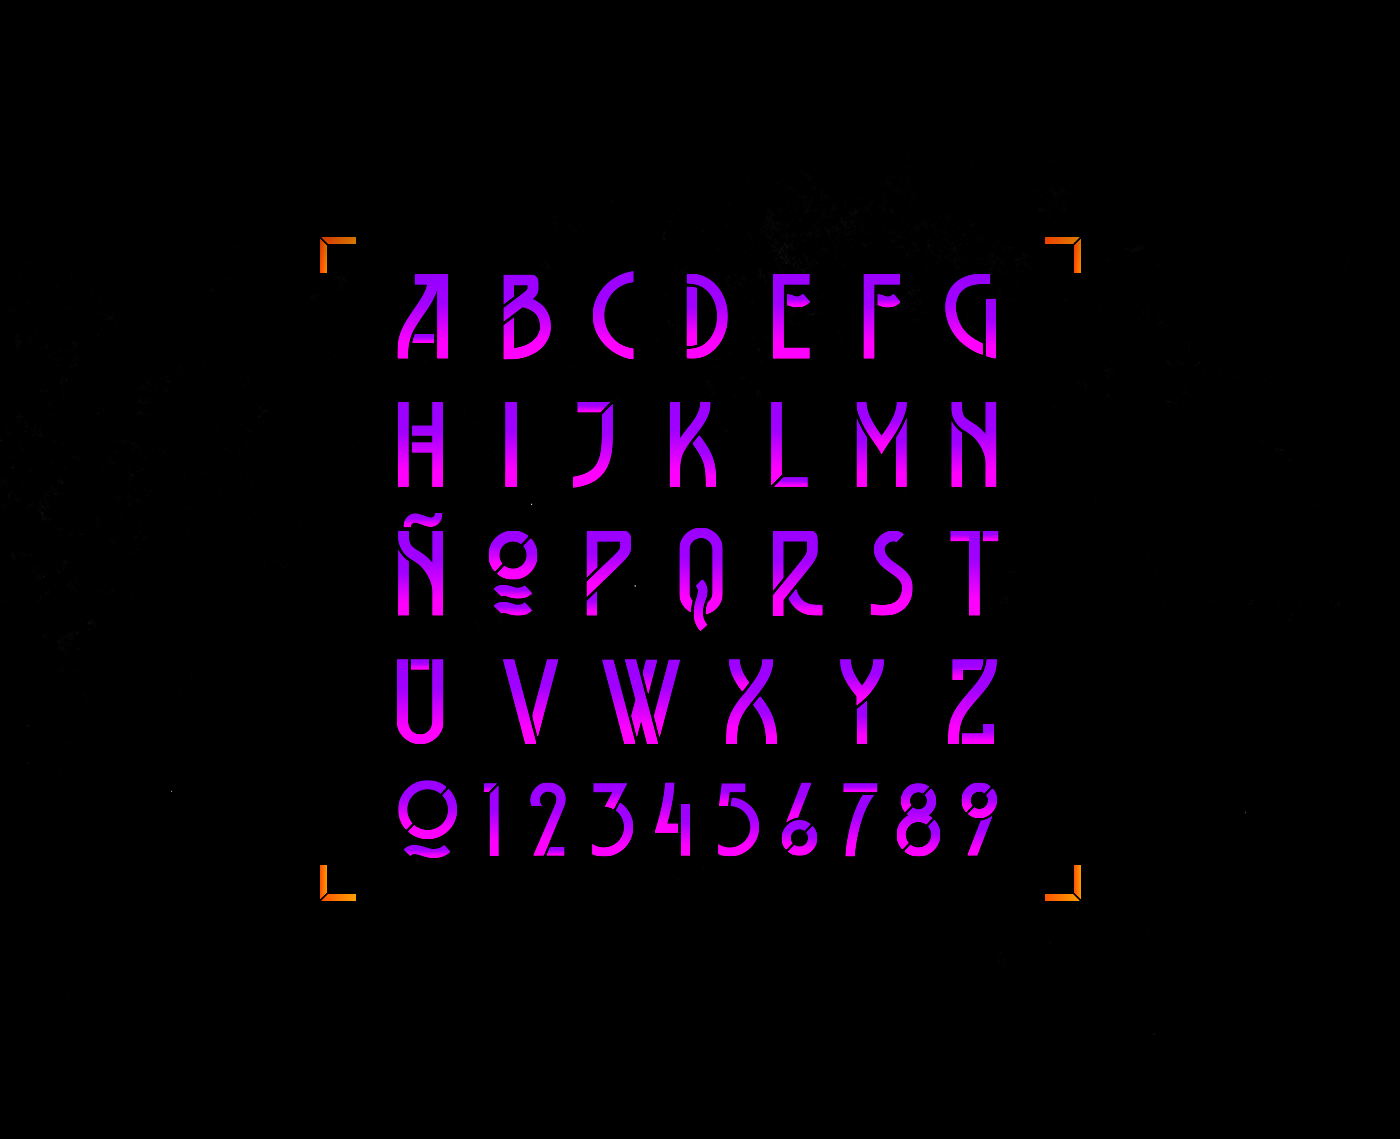 Пример шрифта Belladona Stencil Regular